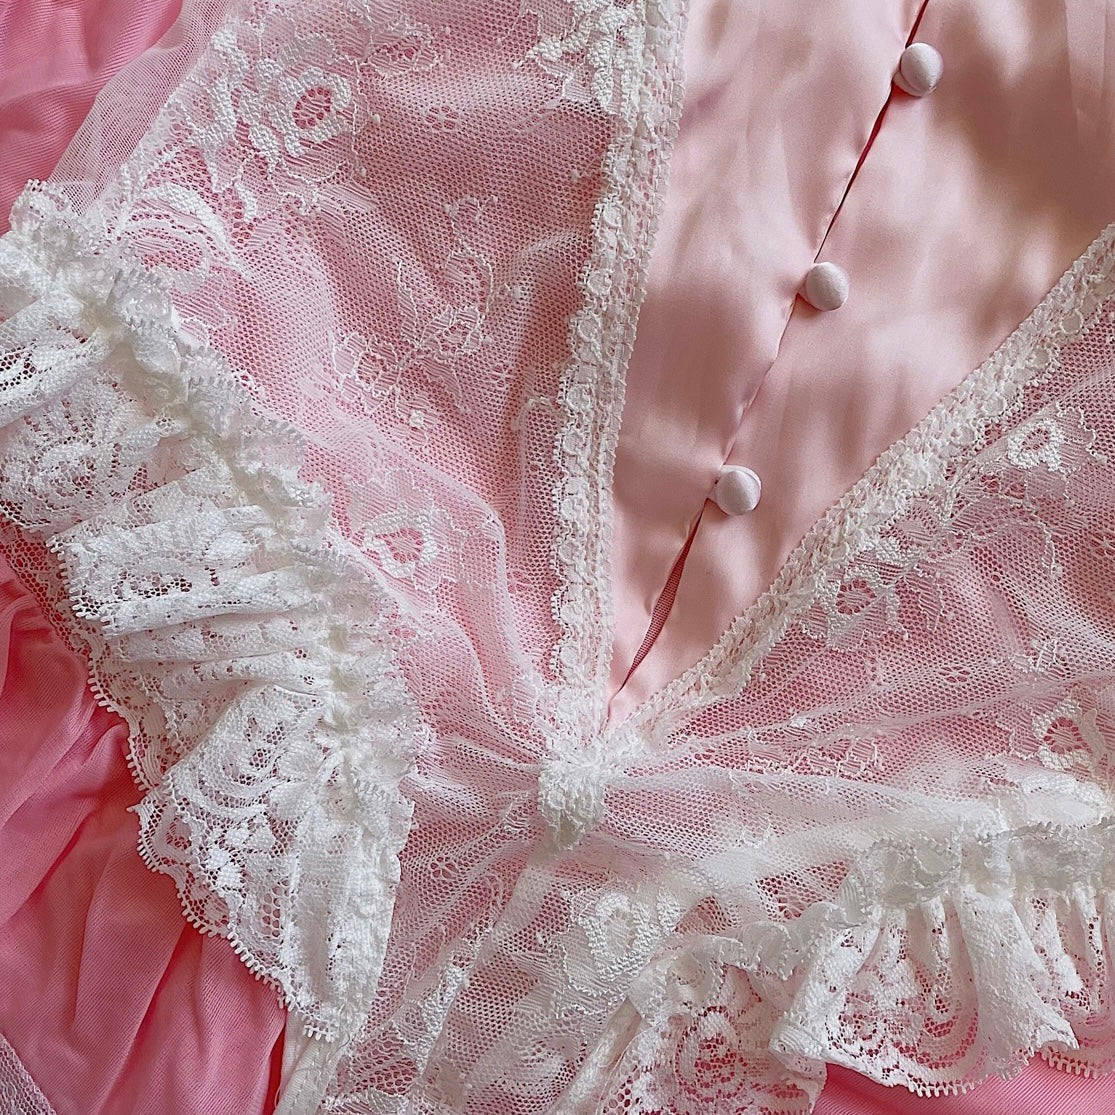 Vintage Blush Pink + White Lace Bodysuit Lingerie - Small